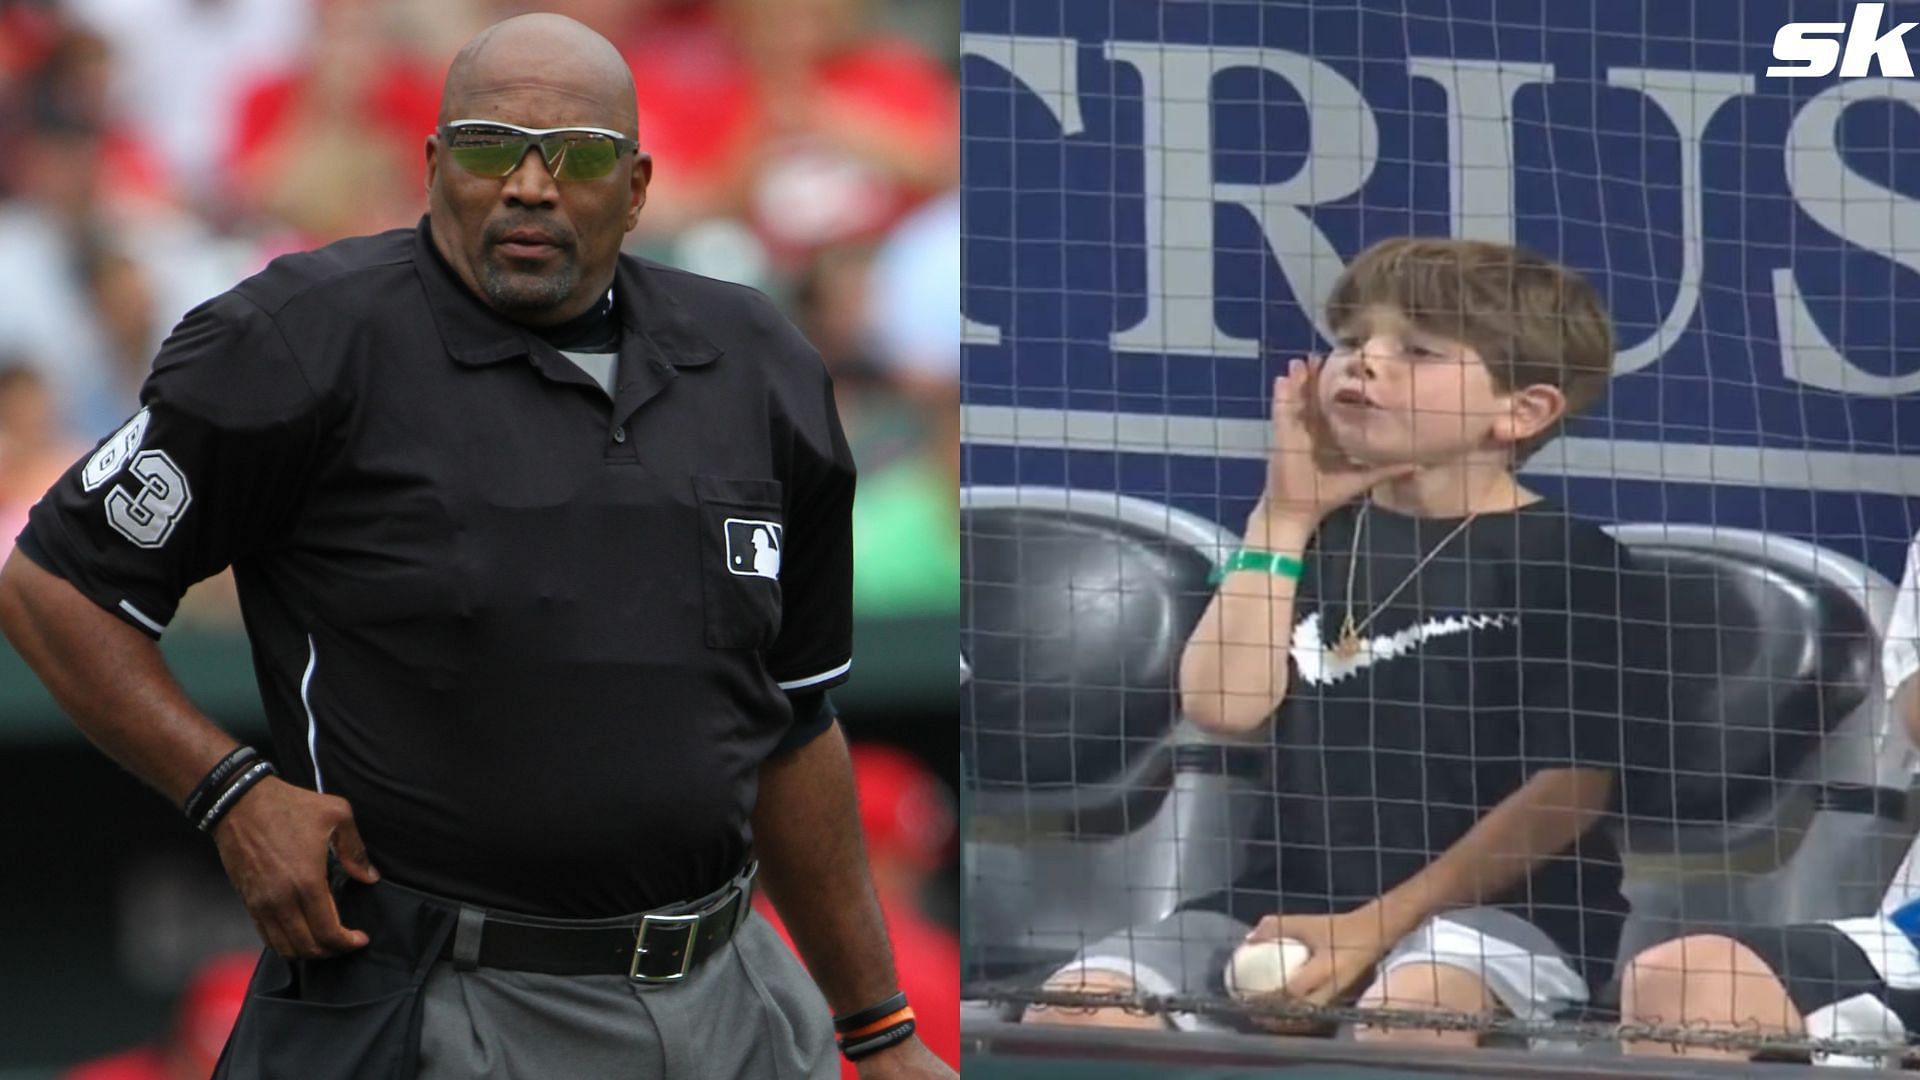 Kid at Yankees stadium disapproves of Laz Diaz